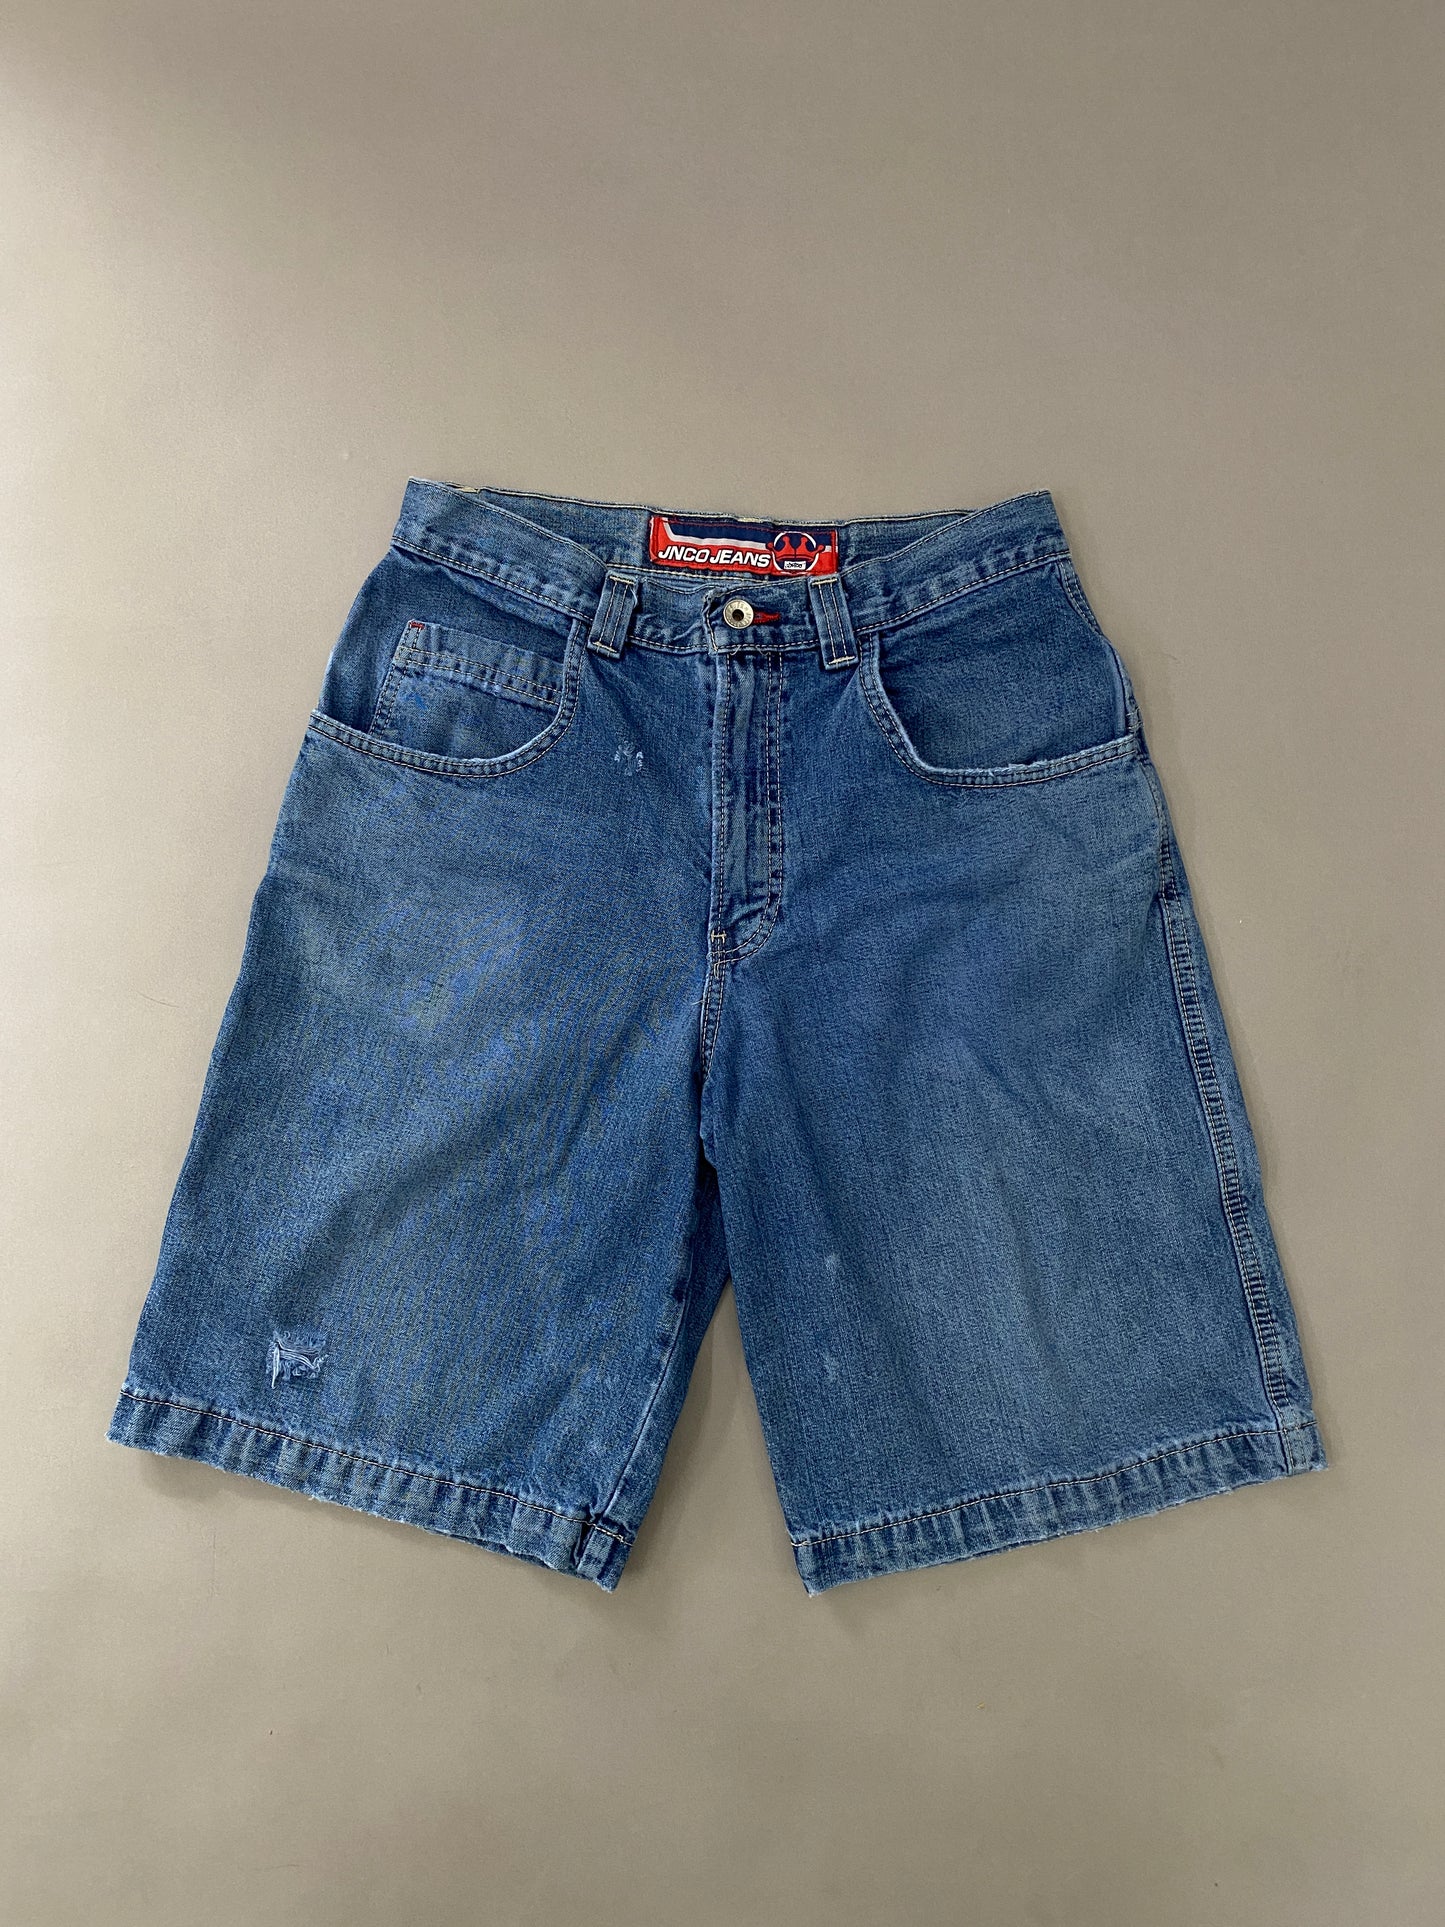 JNCO Vintage Shorts - 32